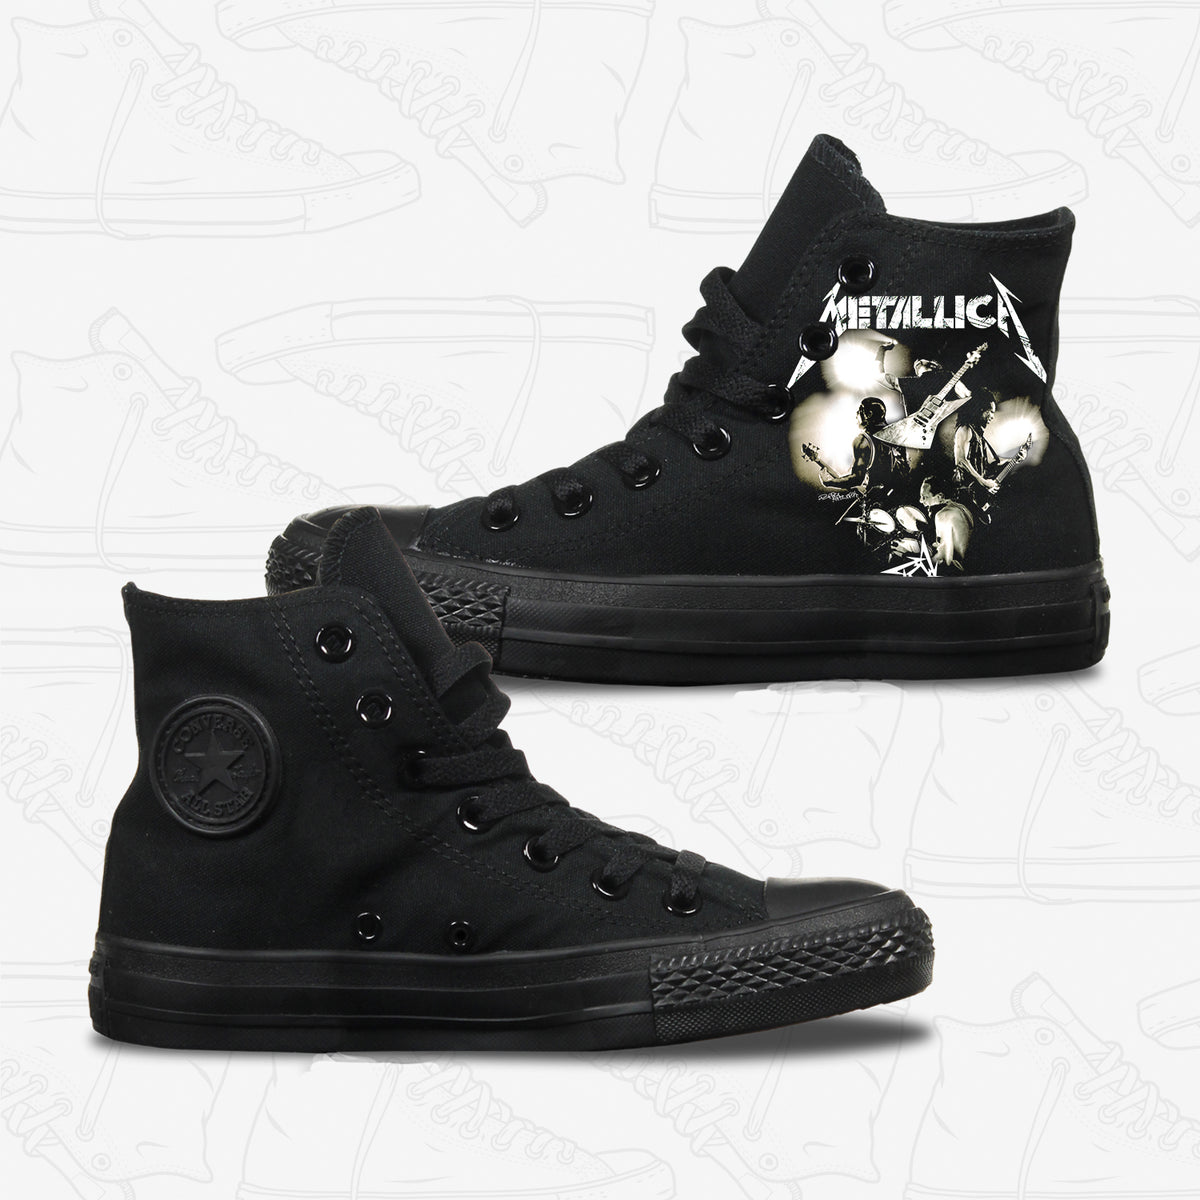 Metallica Adult Converse Shoes